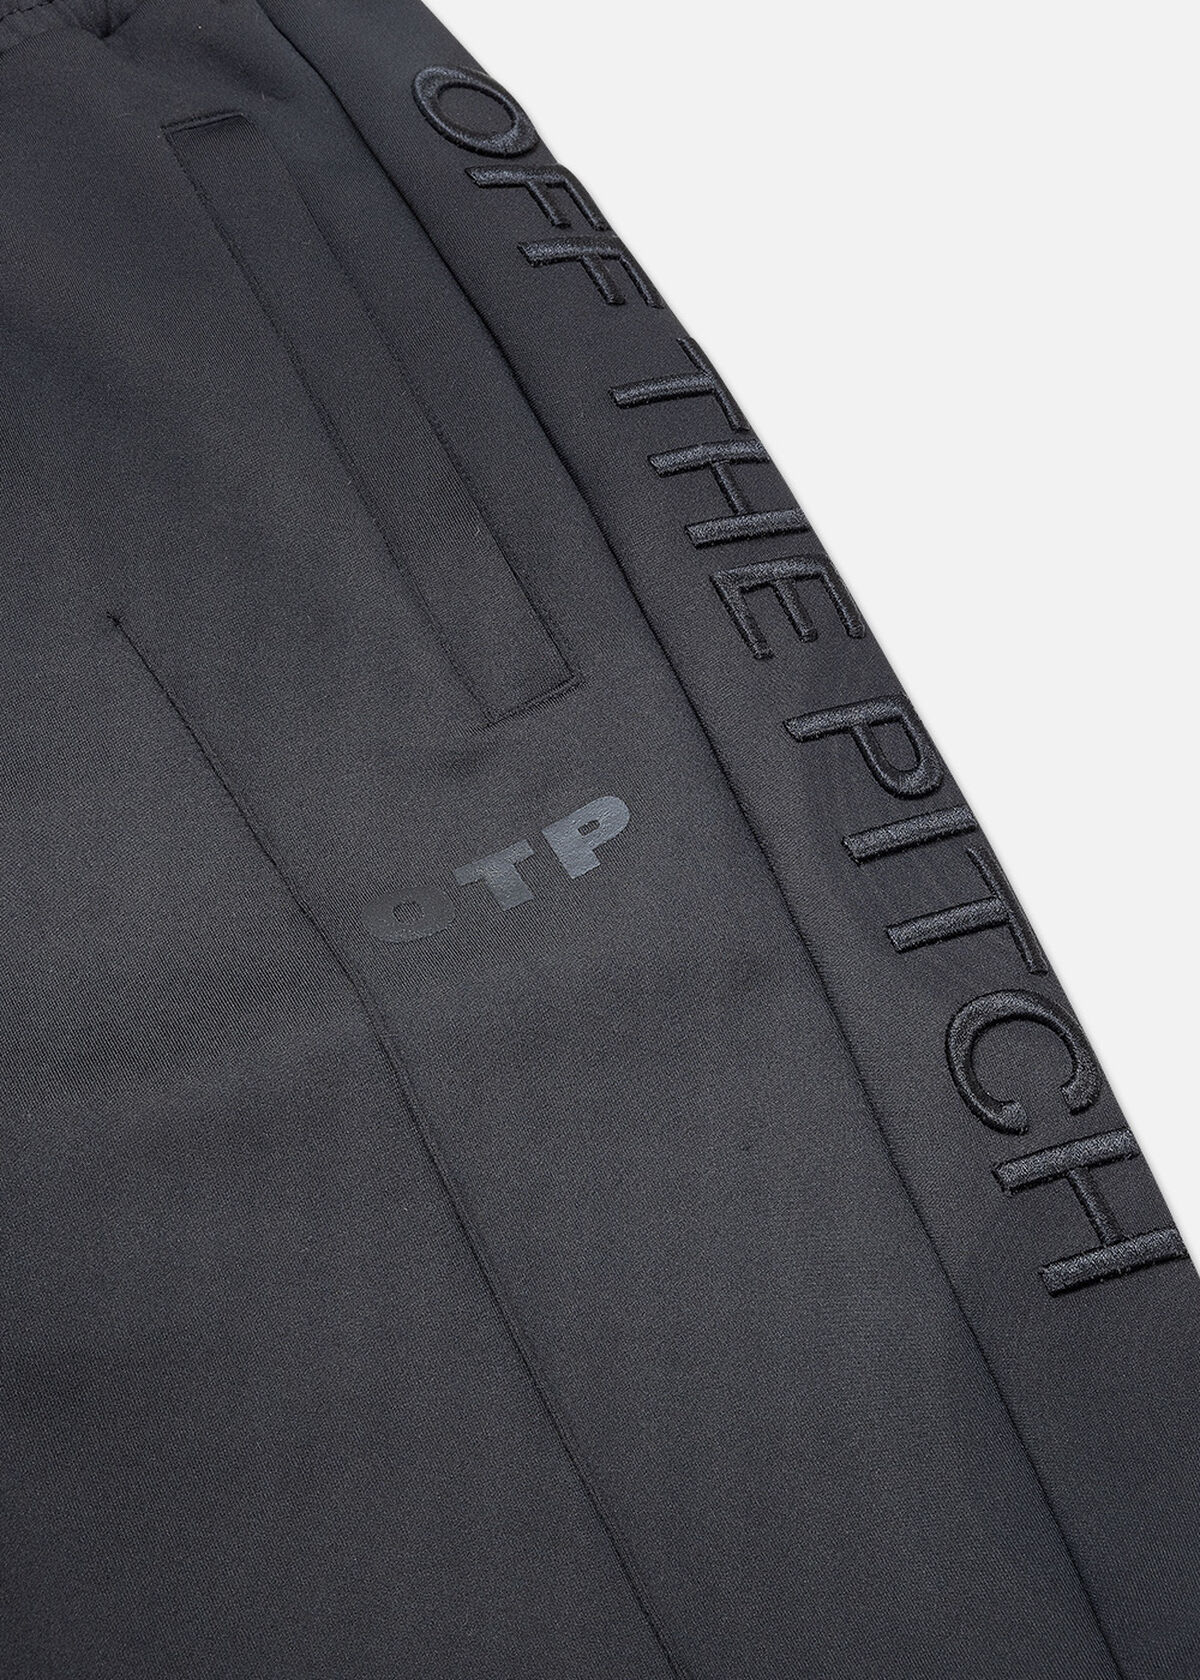 Leisure Track Pants - 95% Polyester / 5% Elastane, Black, hi-res